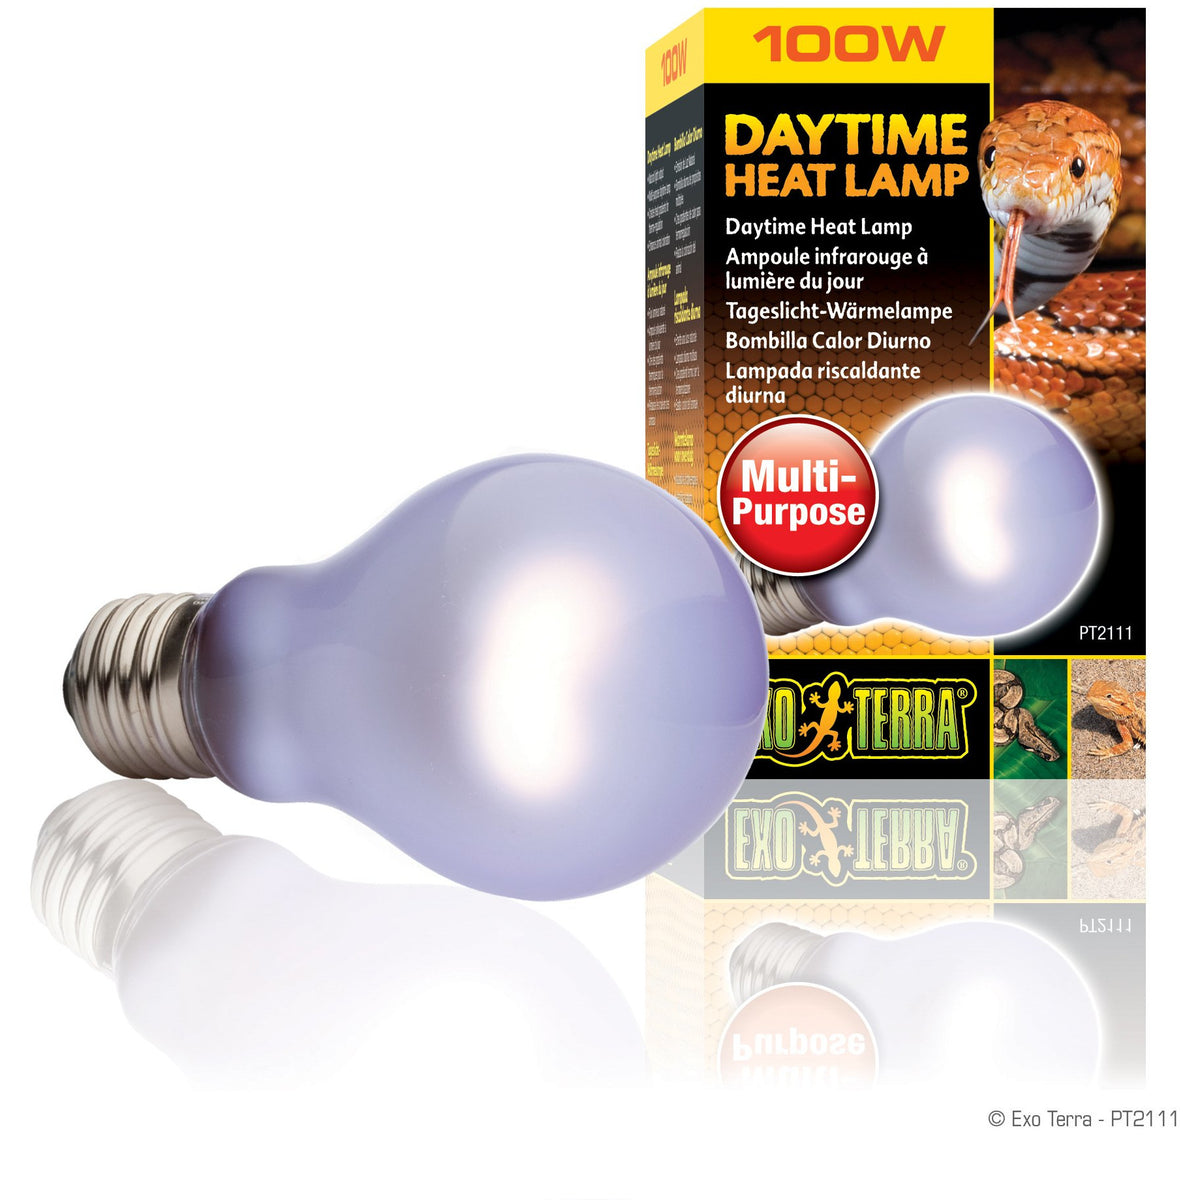 Exo Terra Daytime Heat Lamp - A19 / 100 W